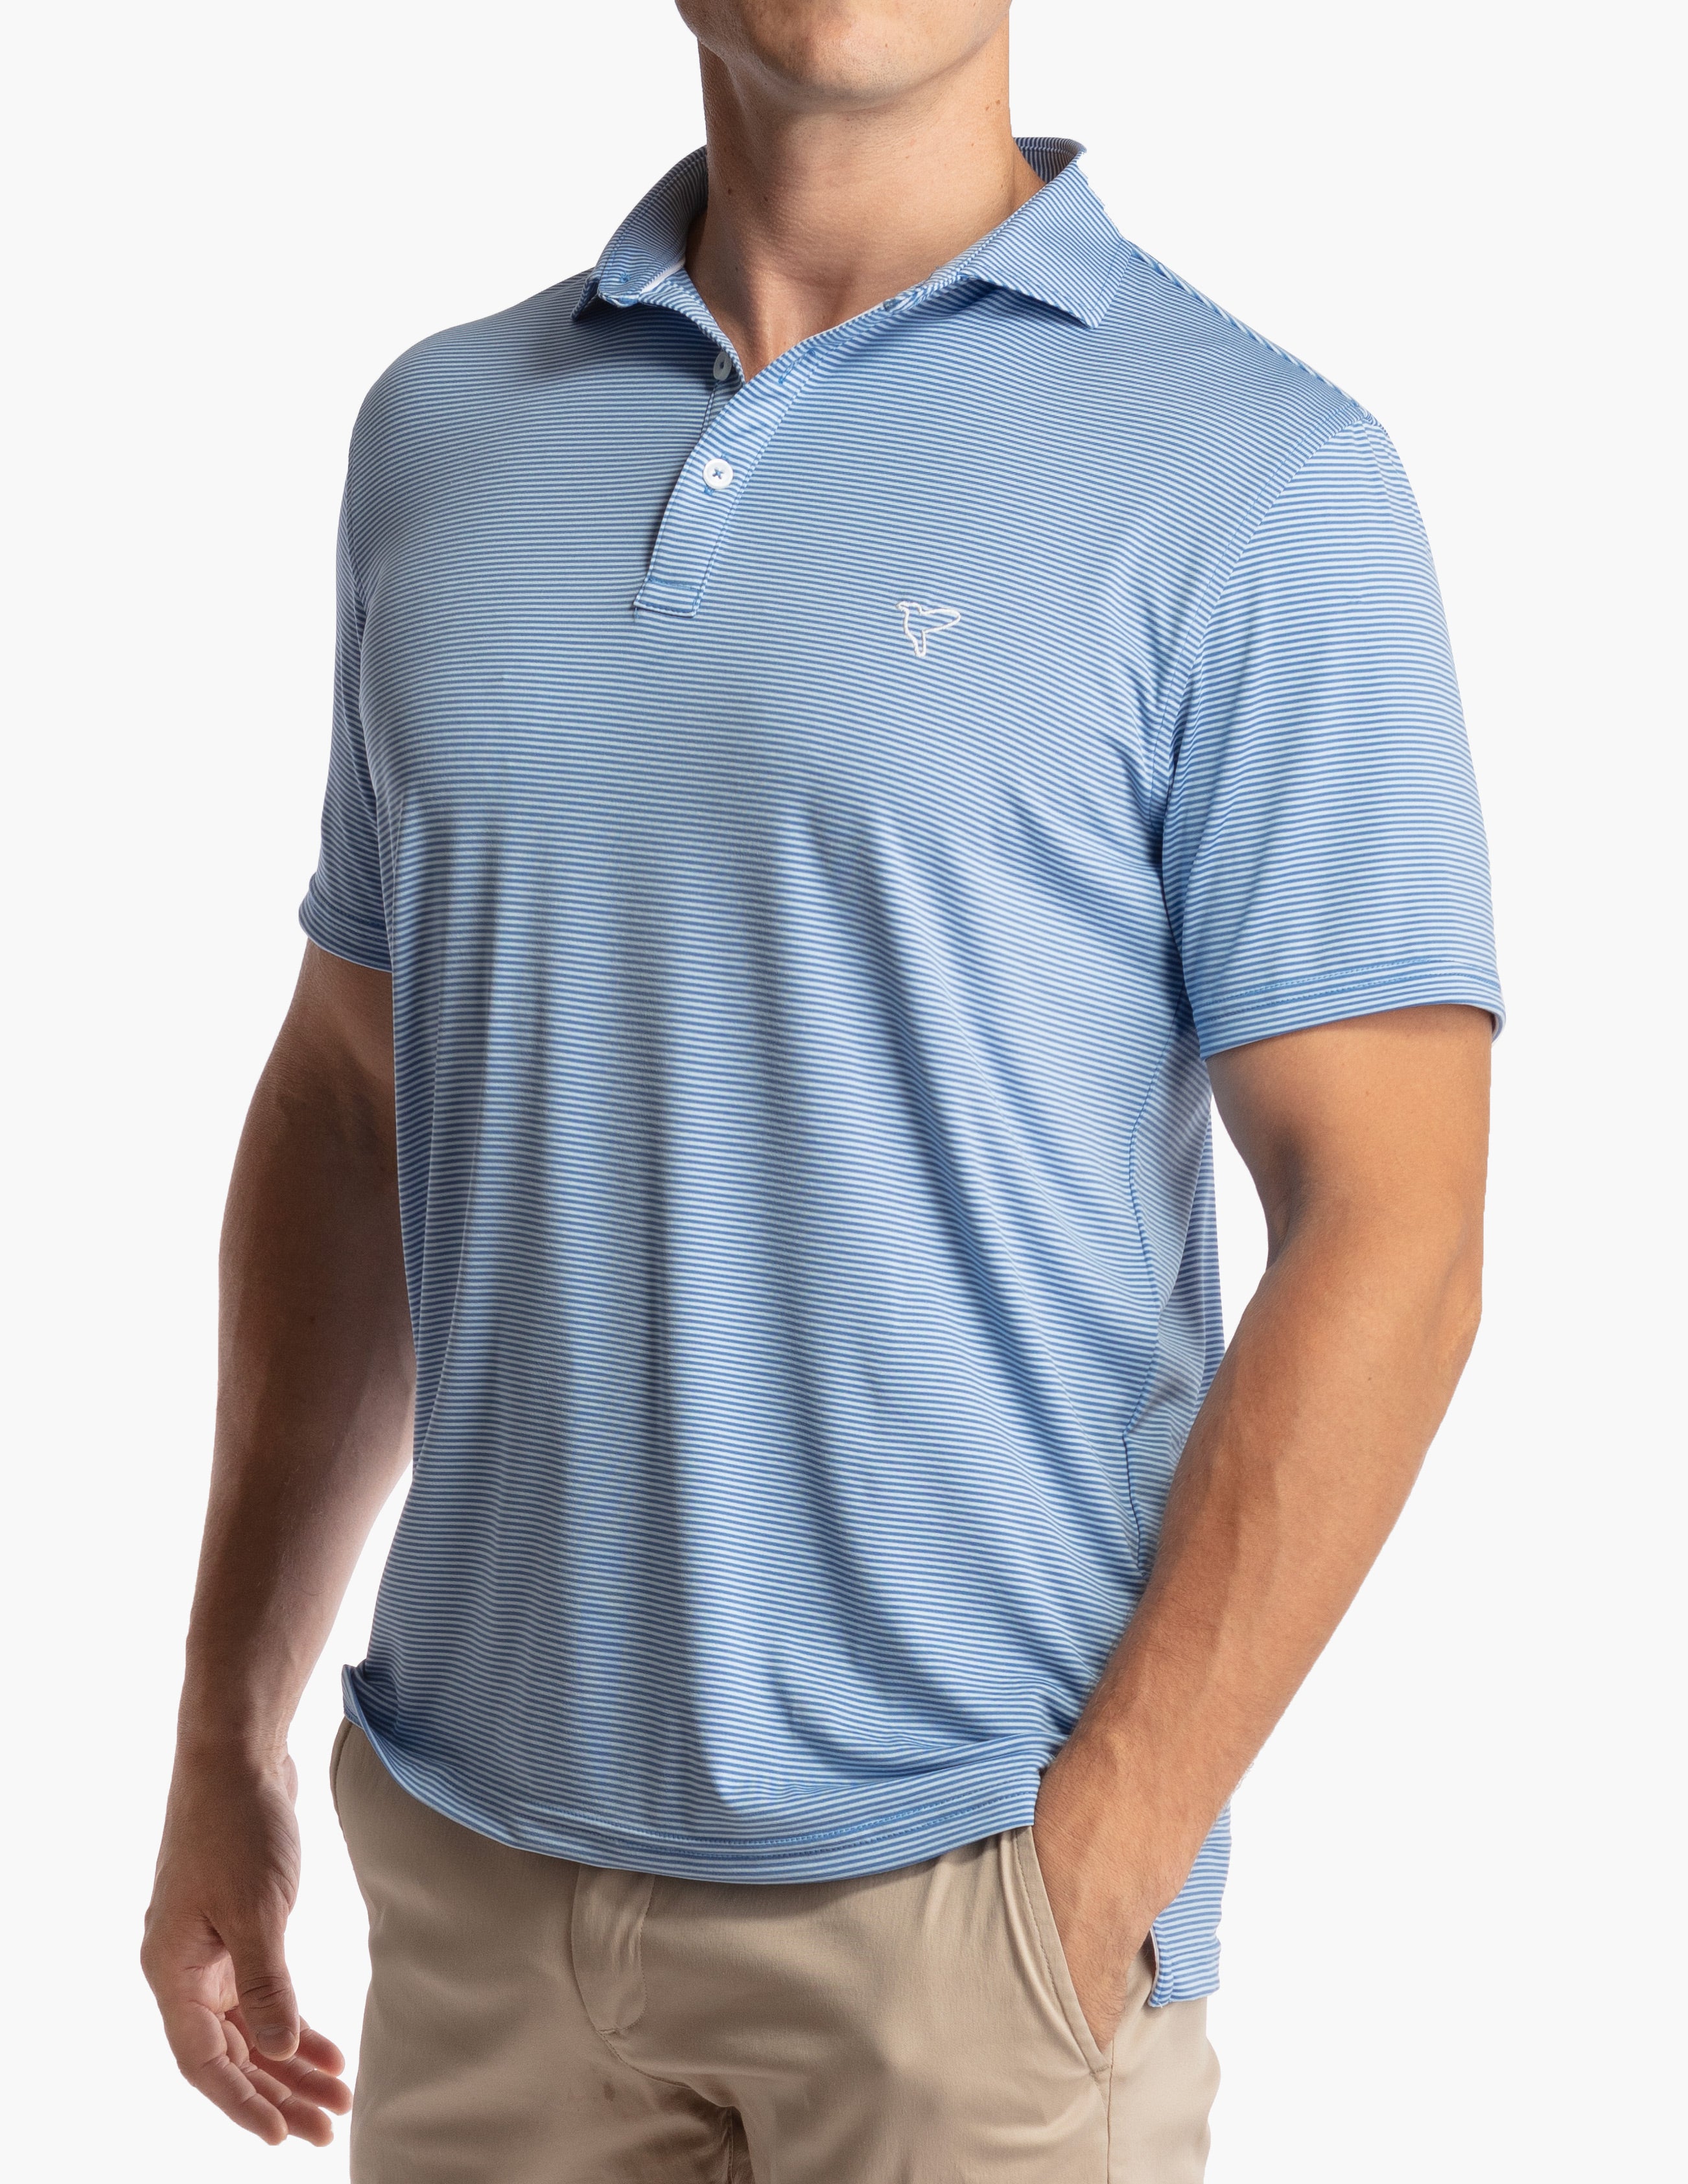 Big Bill Premium Long Sleeve Snap Front Work Shirt - Frank's